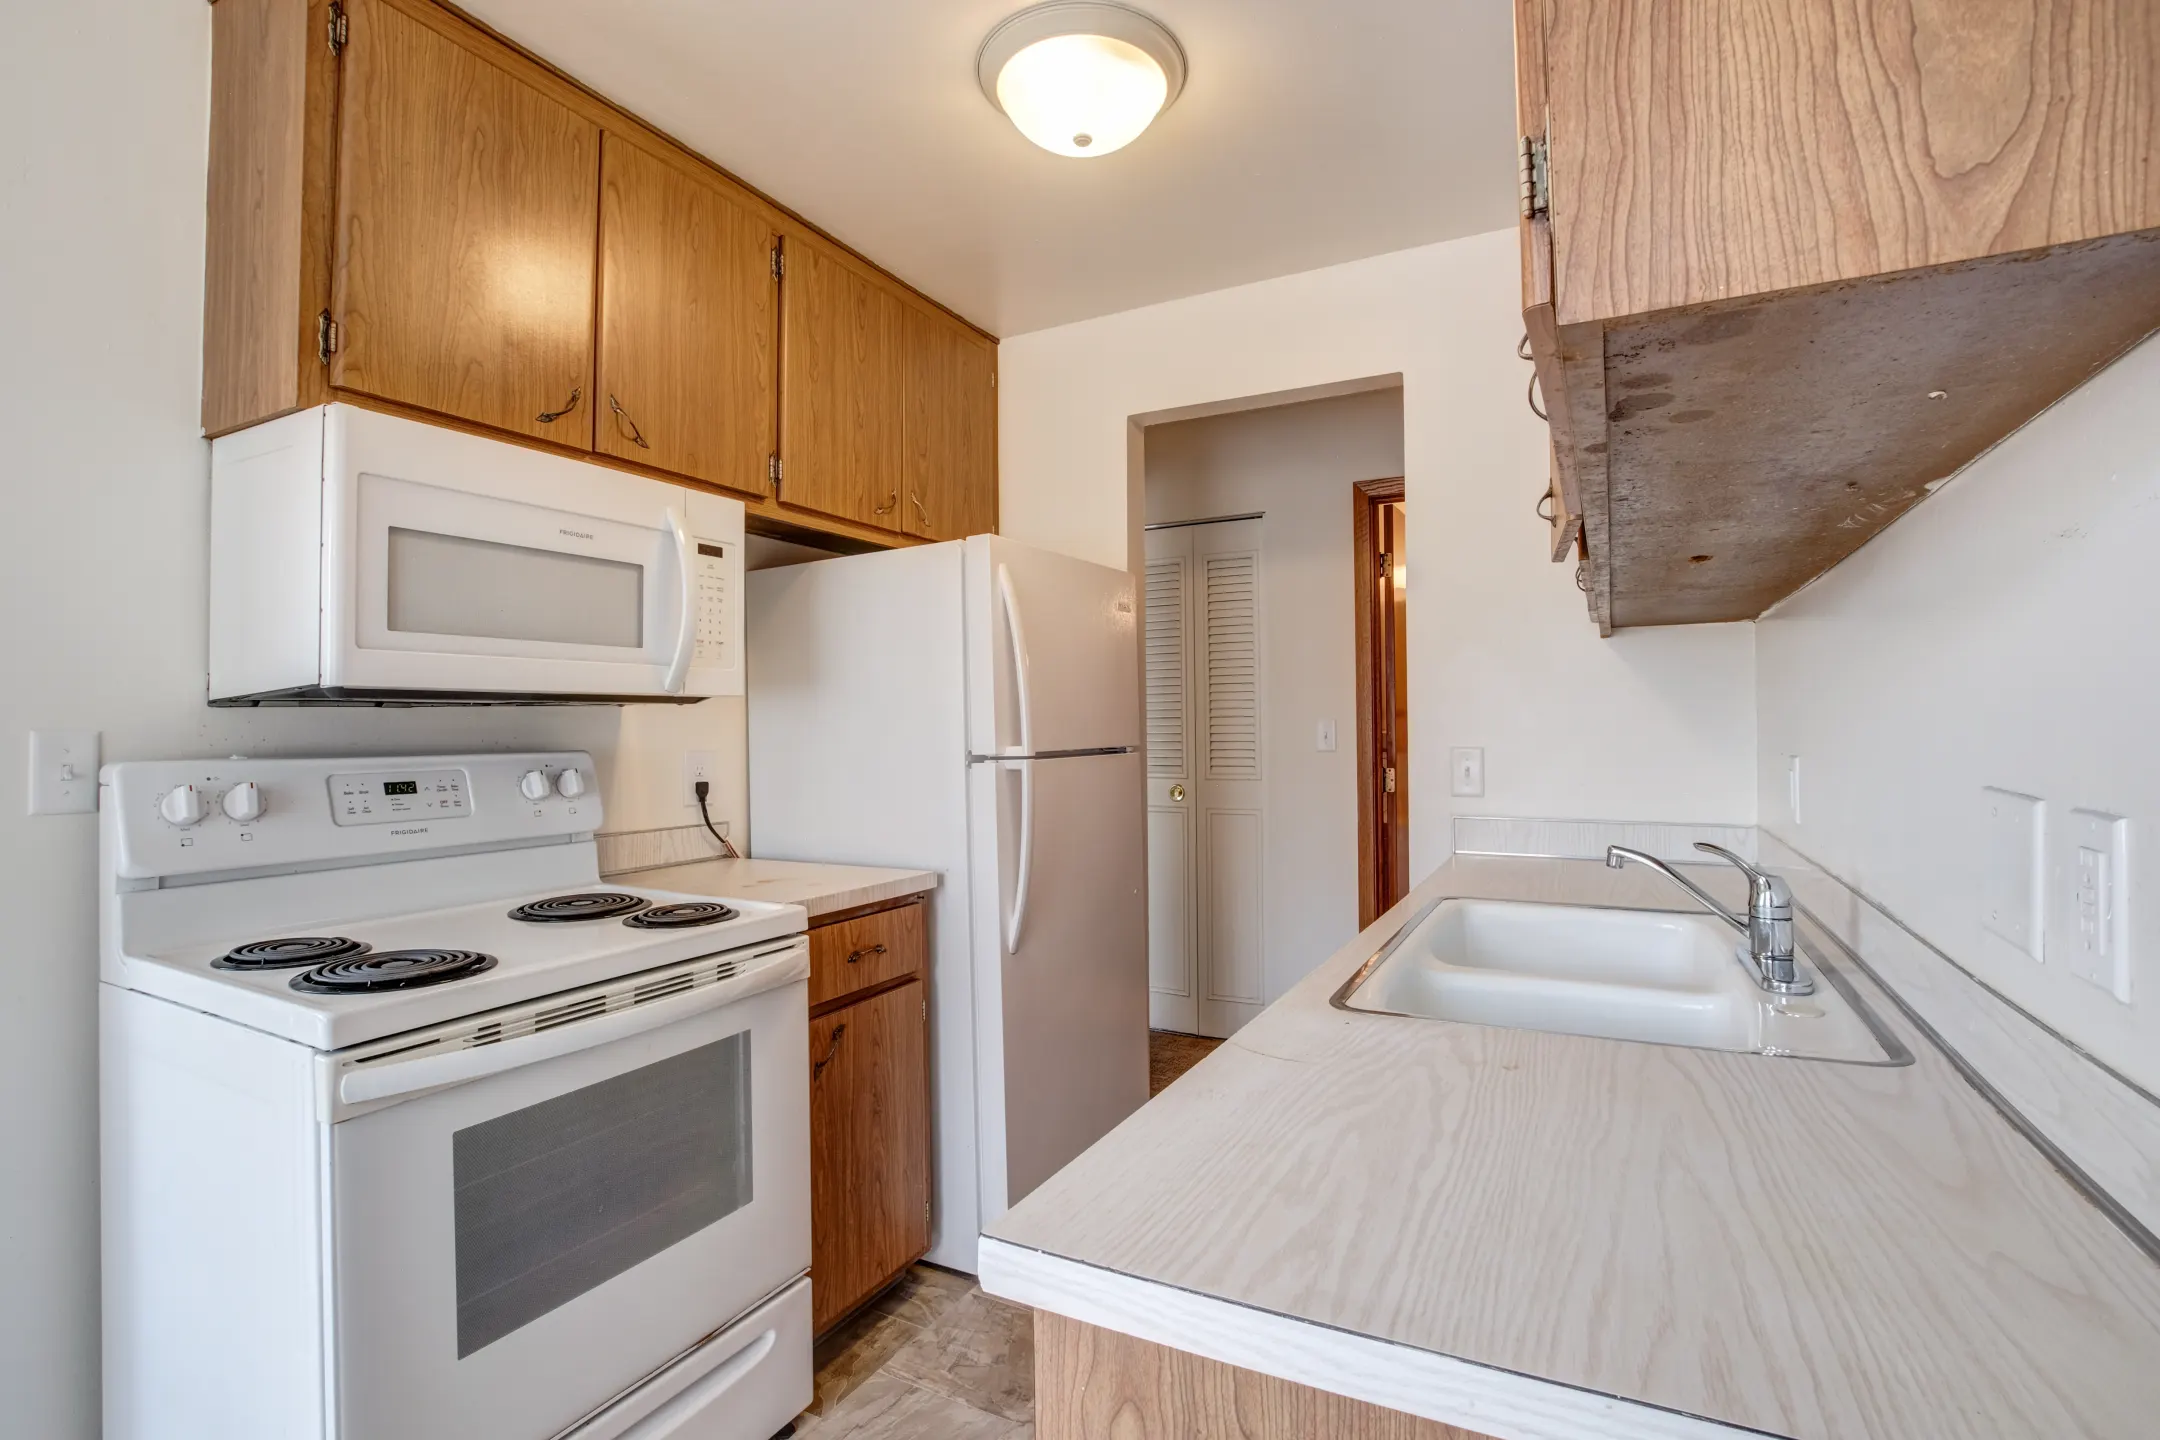 Kitchen - Sheraton Place Apartments - Saint Paul, MN